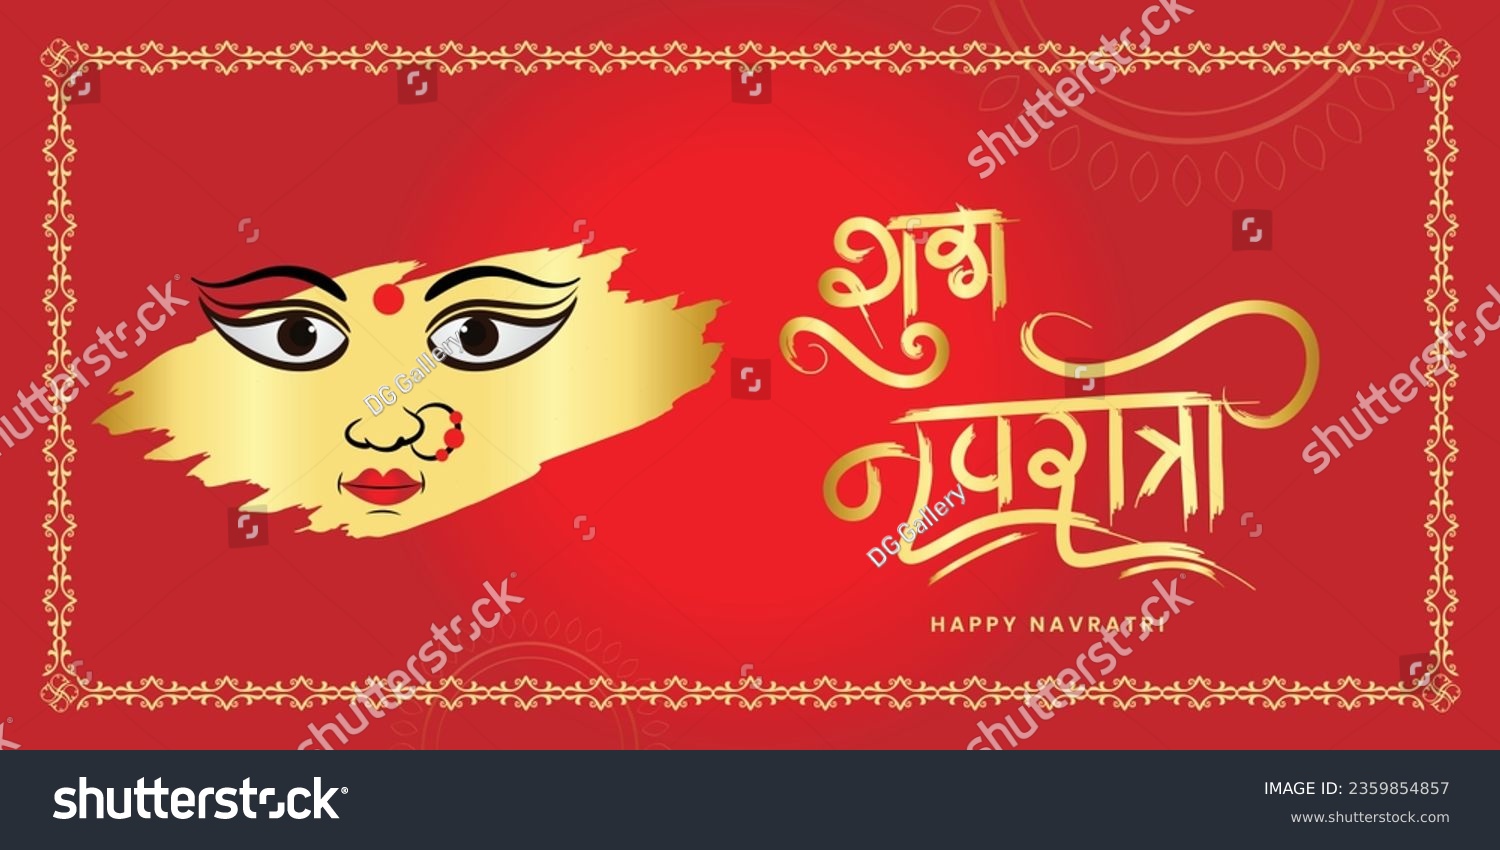 SVG of Happy Navratri banner with hindu goddess face illustration, Hindi Text of Shubh Navratri Means 'Nine Nights of Divinity' svg